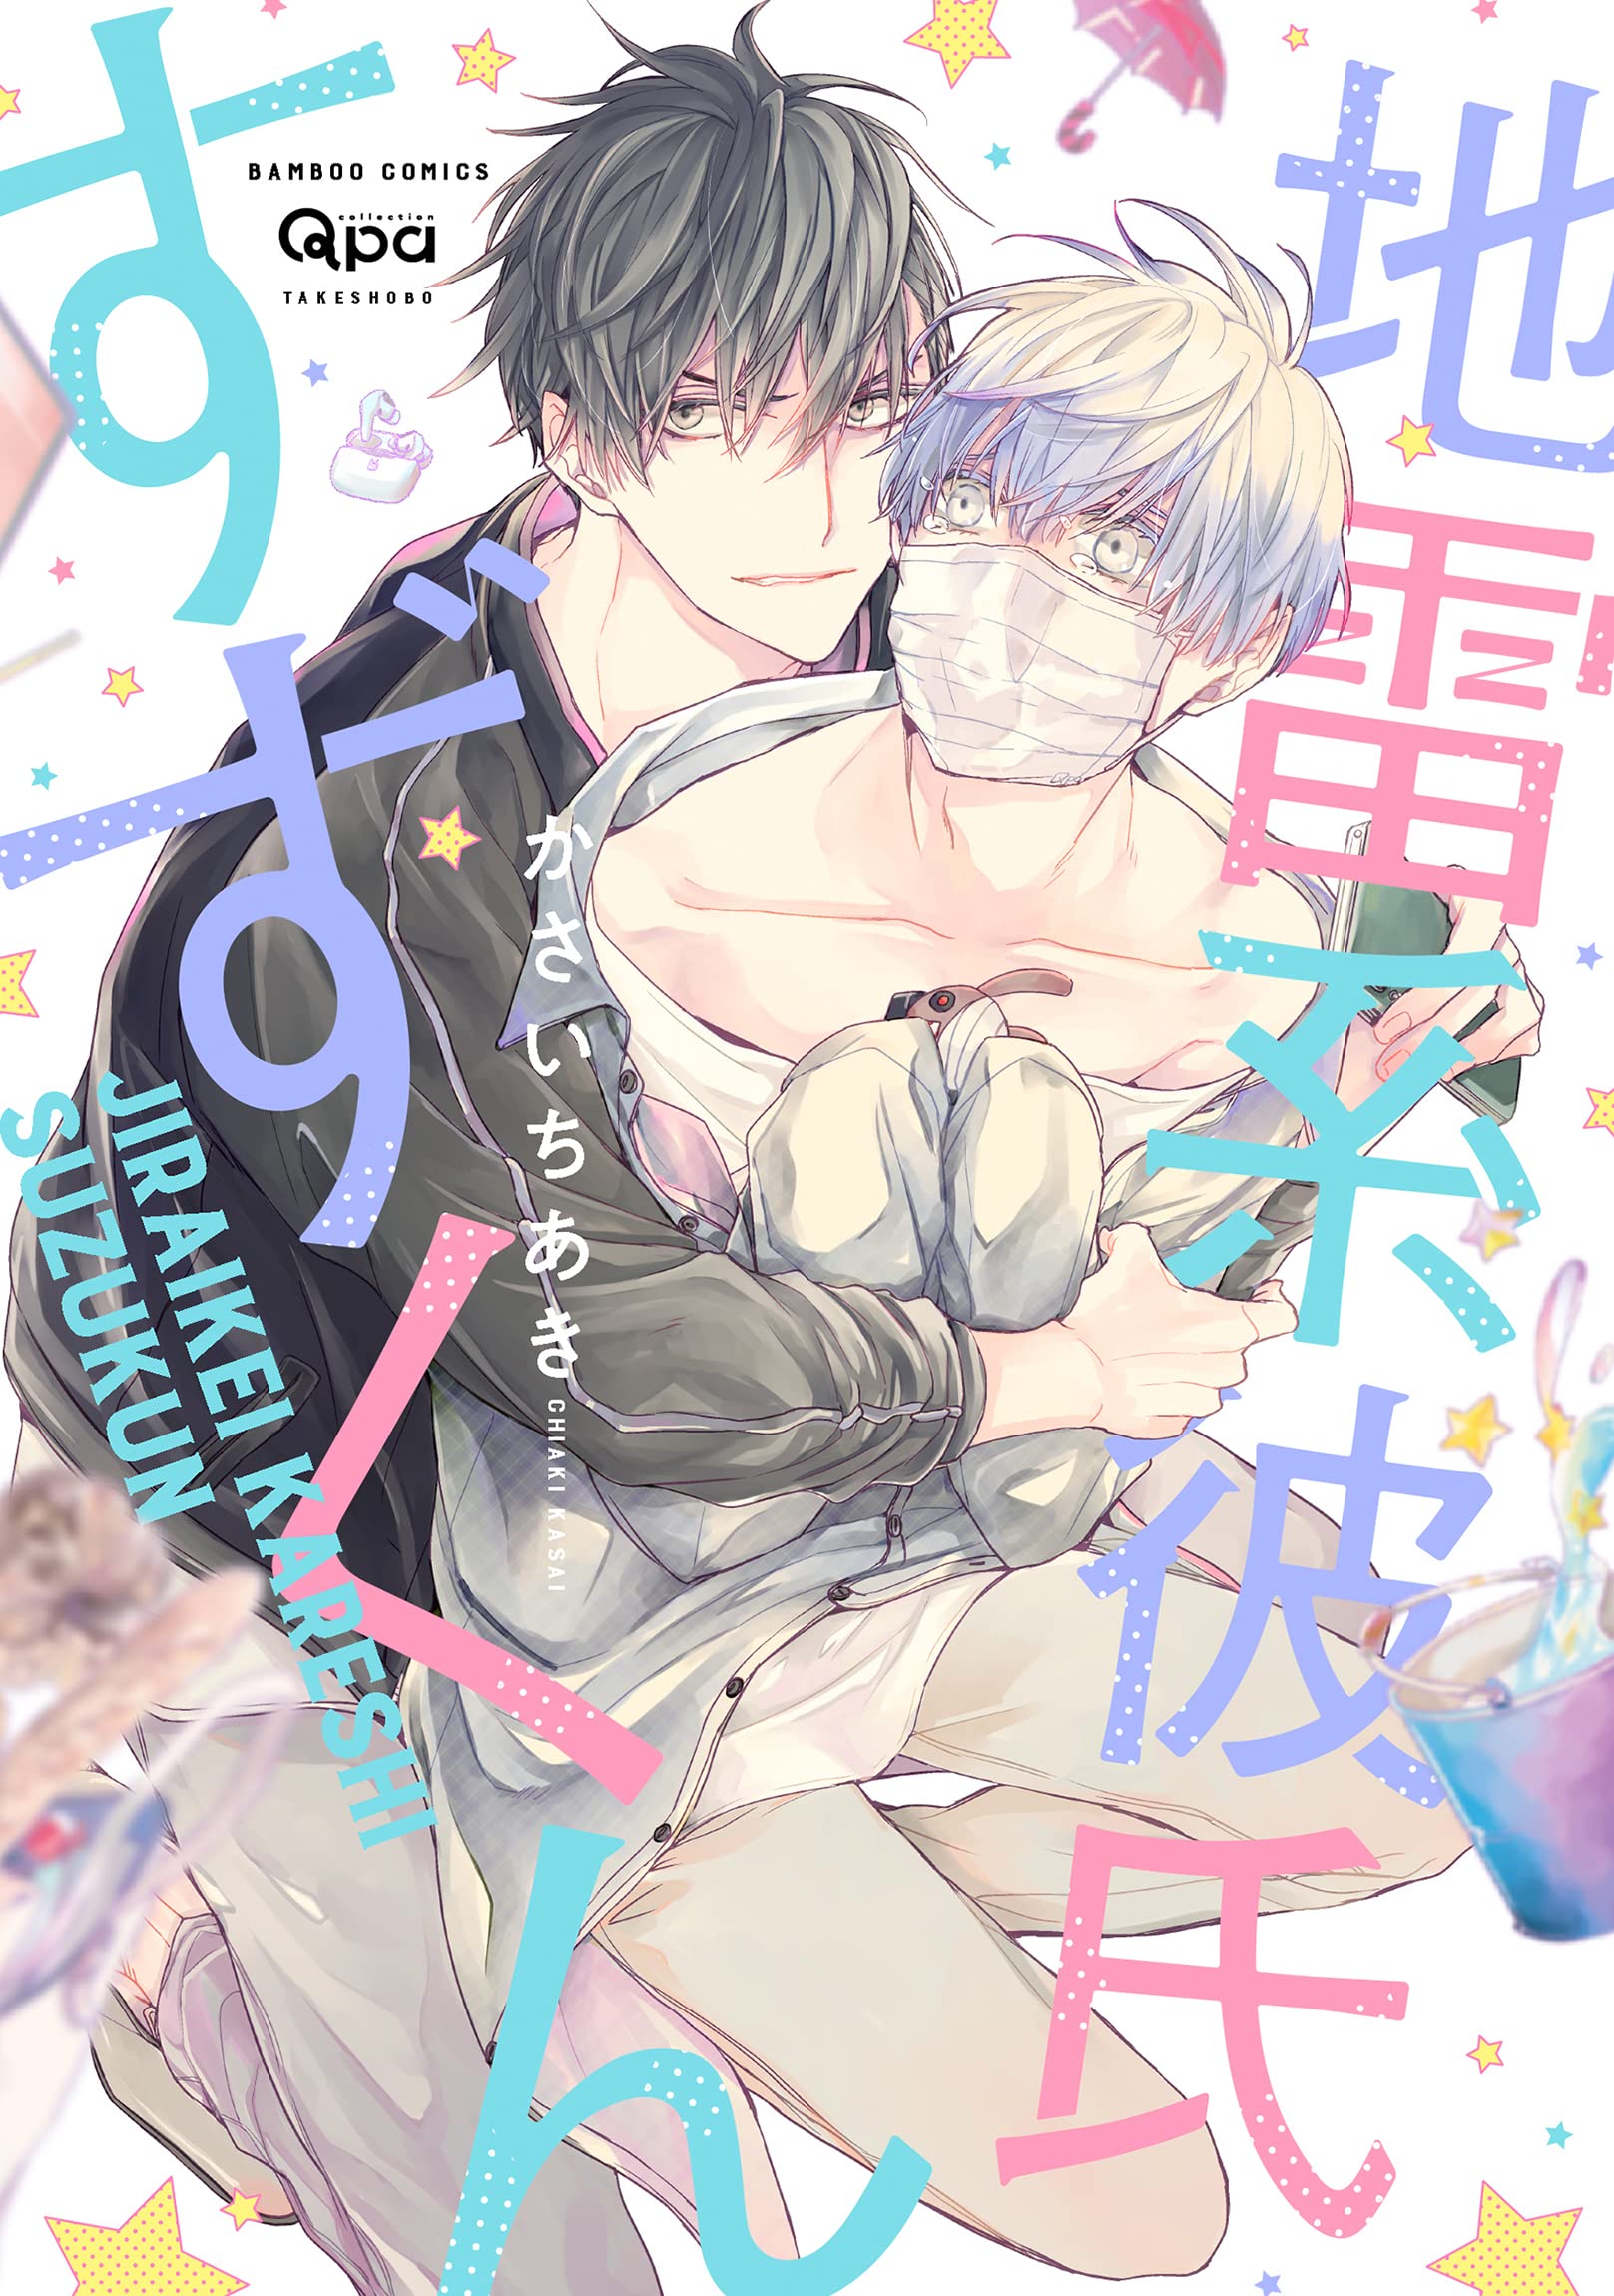 Boys Love (Yaoi) Comics - Jiraikei Kareshi Suzu-kun (地雷系彼氏すずくん (バンブー・コミックス Qpa collection)) / Kasai Chiaki